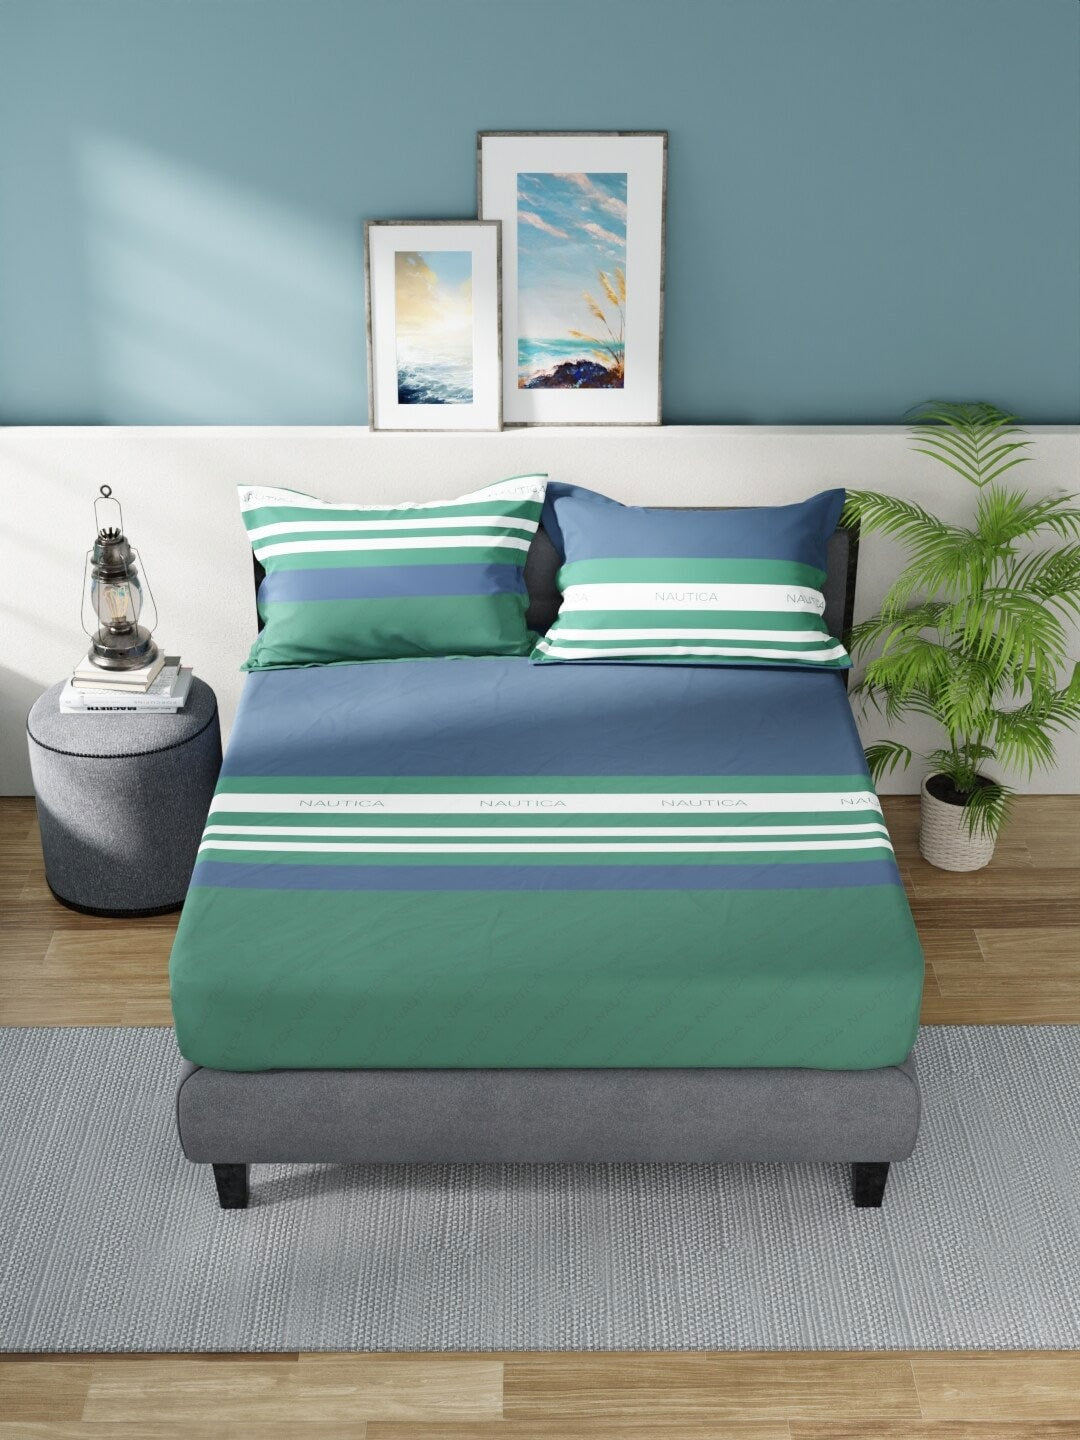 Nautica Bradford Comforter And Pillow Sham Set, Bedding Sets, Household